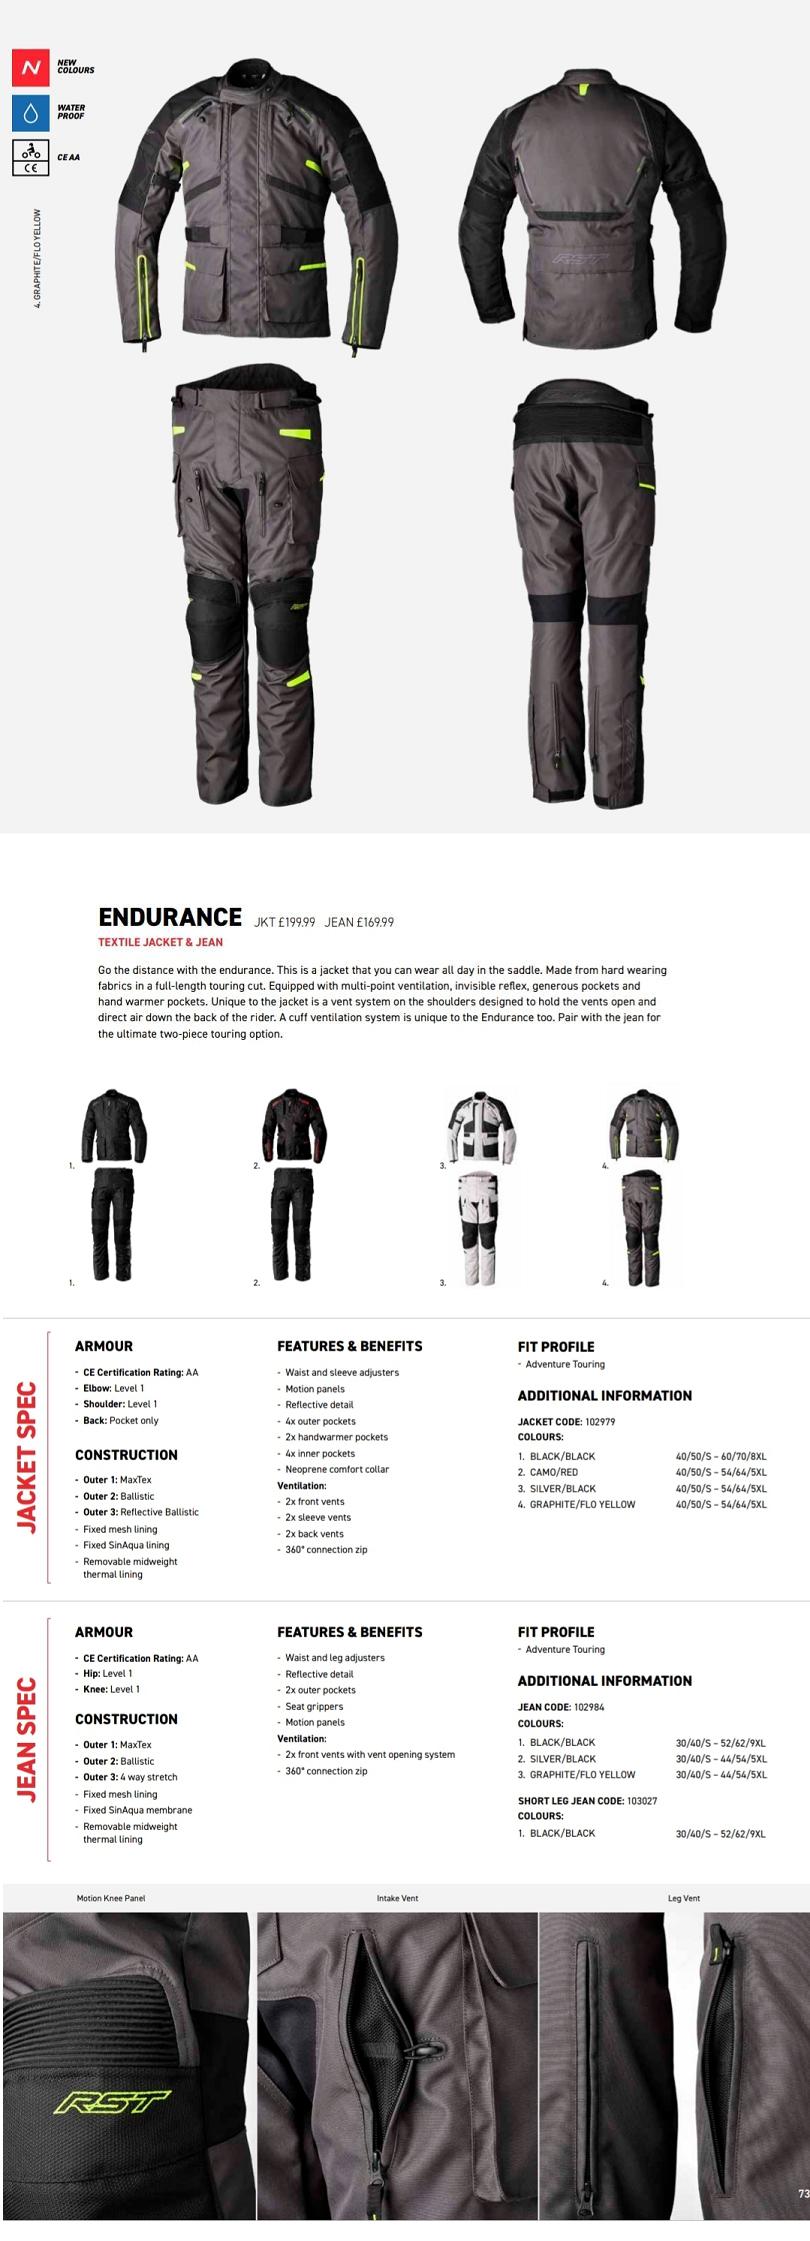 RST Endurance textile jacket and pant